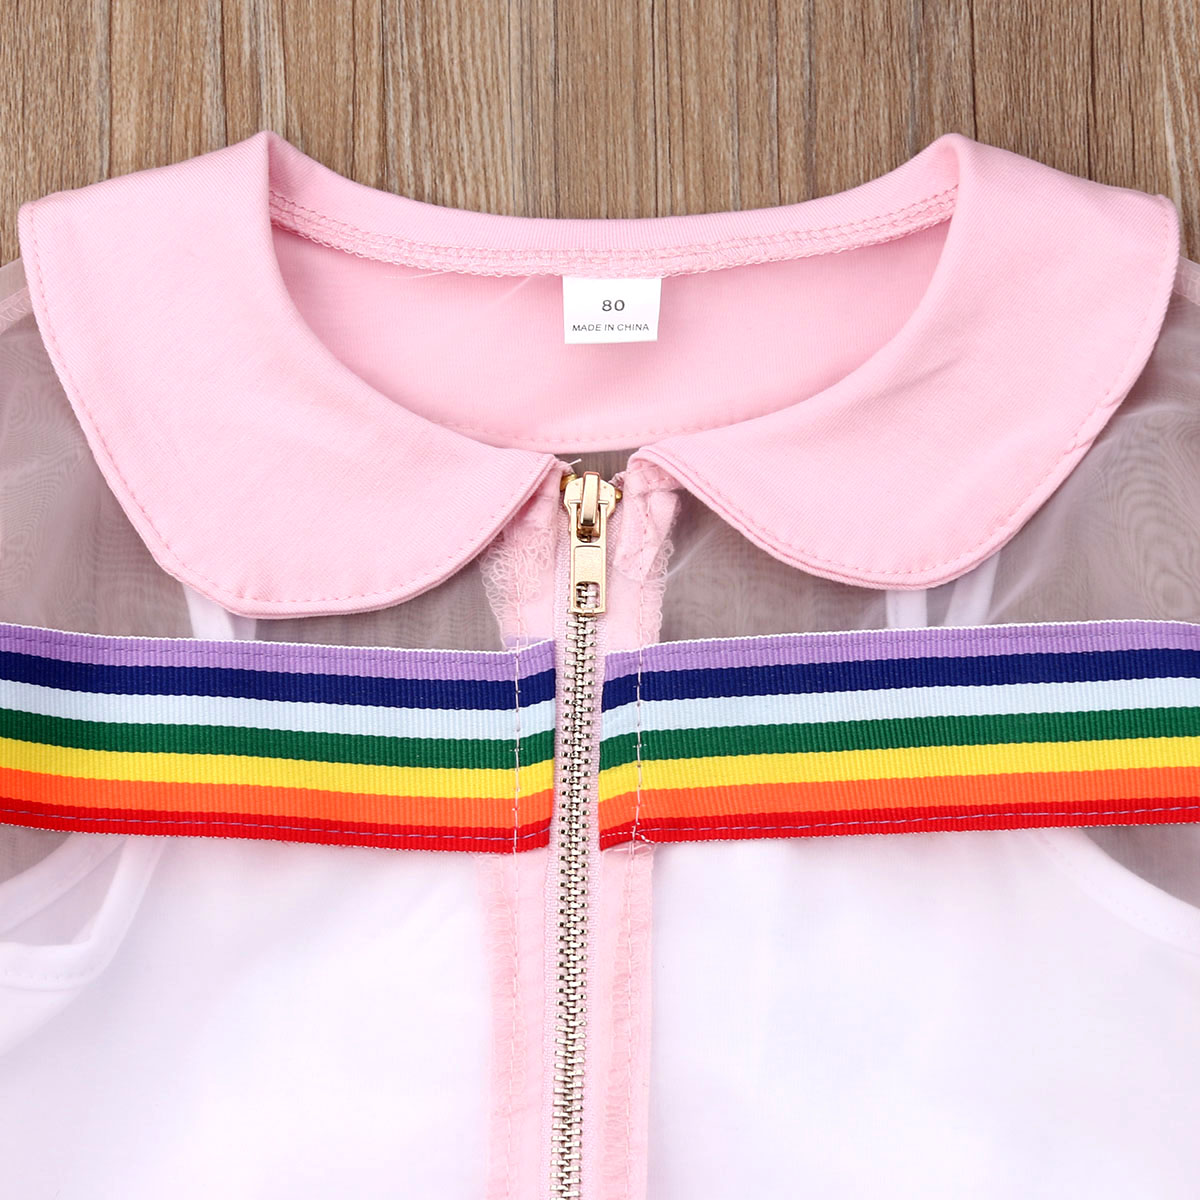 2019 Children Summer Clothing Toddler Kids Baby Girl Mesh Coat Vest Pants Outfit 3Pcs UV Sunsuit Colorful Rainbow Striped Set